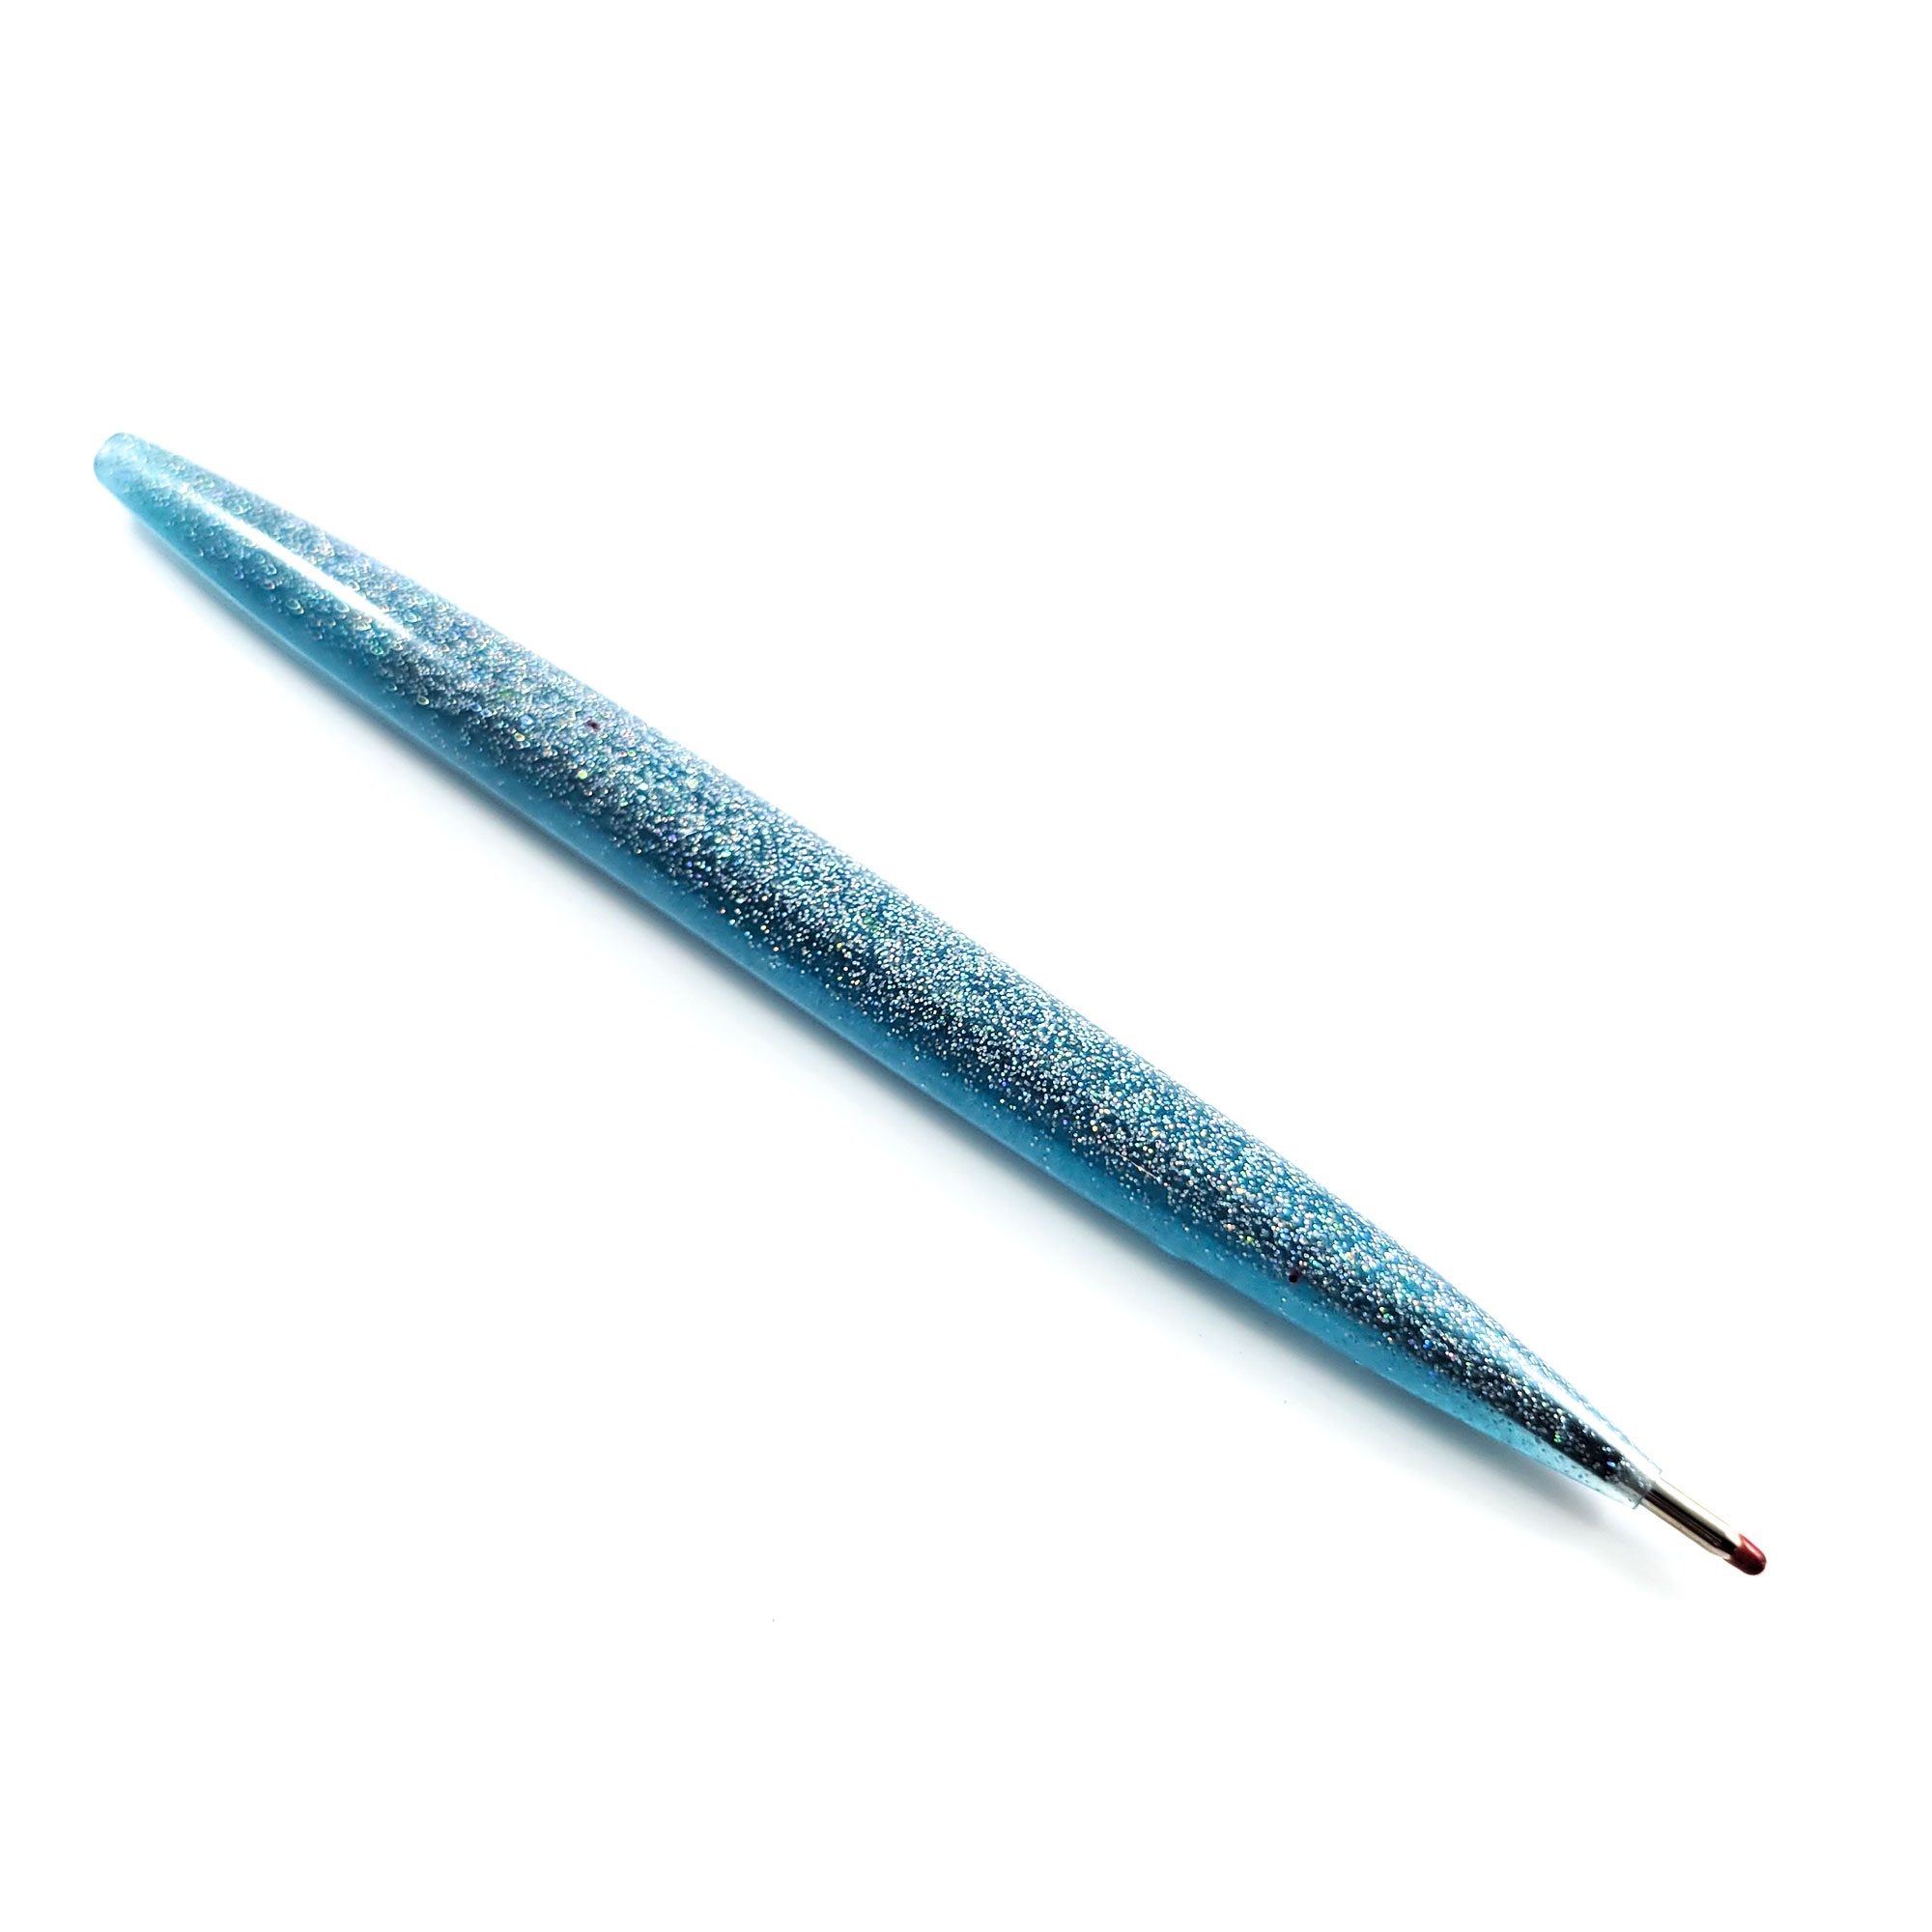 Glittery Blue Handmade Ball Point Pen by Wilde Designs